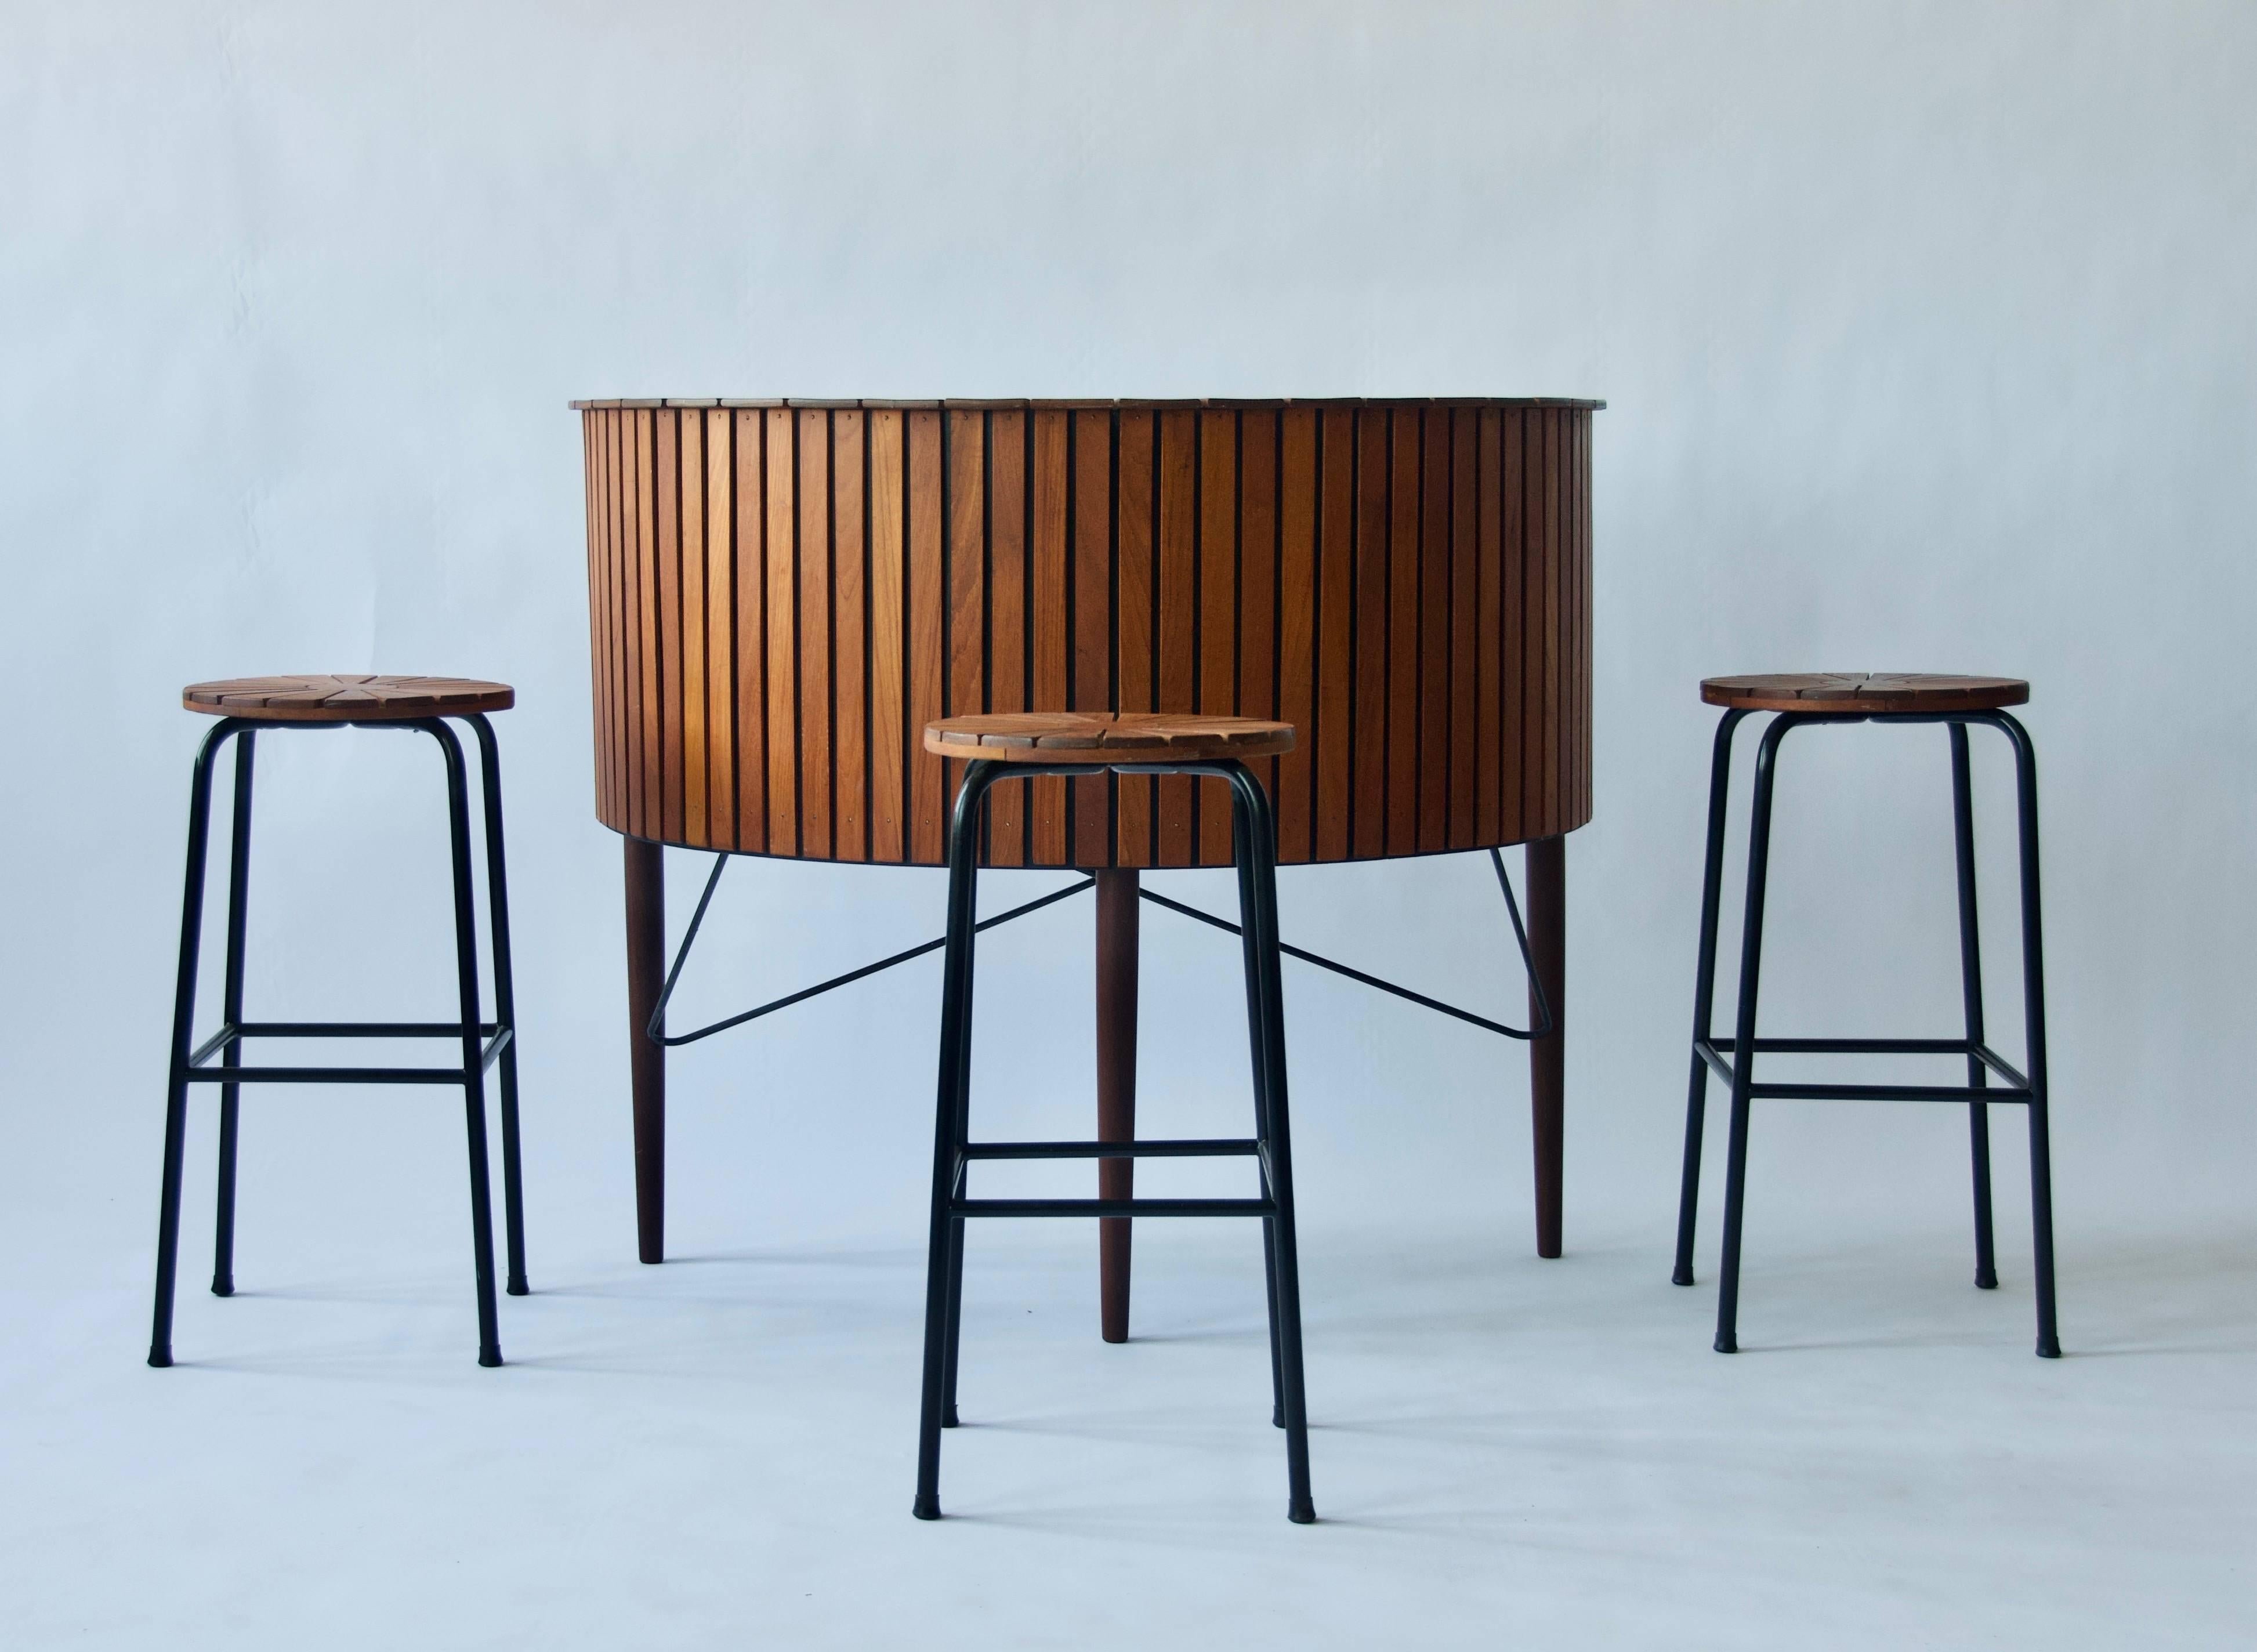 1960s Danish bar and stools. Three stools with metal frames. Teak
Bar measures 48 W x 25 D x 41 height. Stools 28 high.